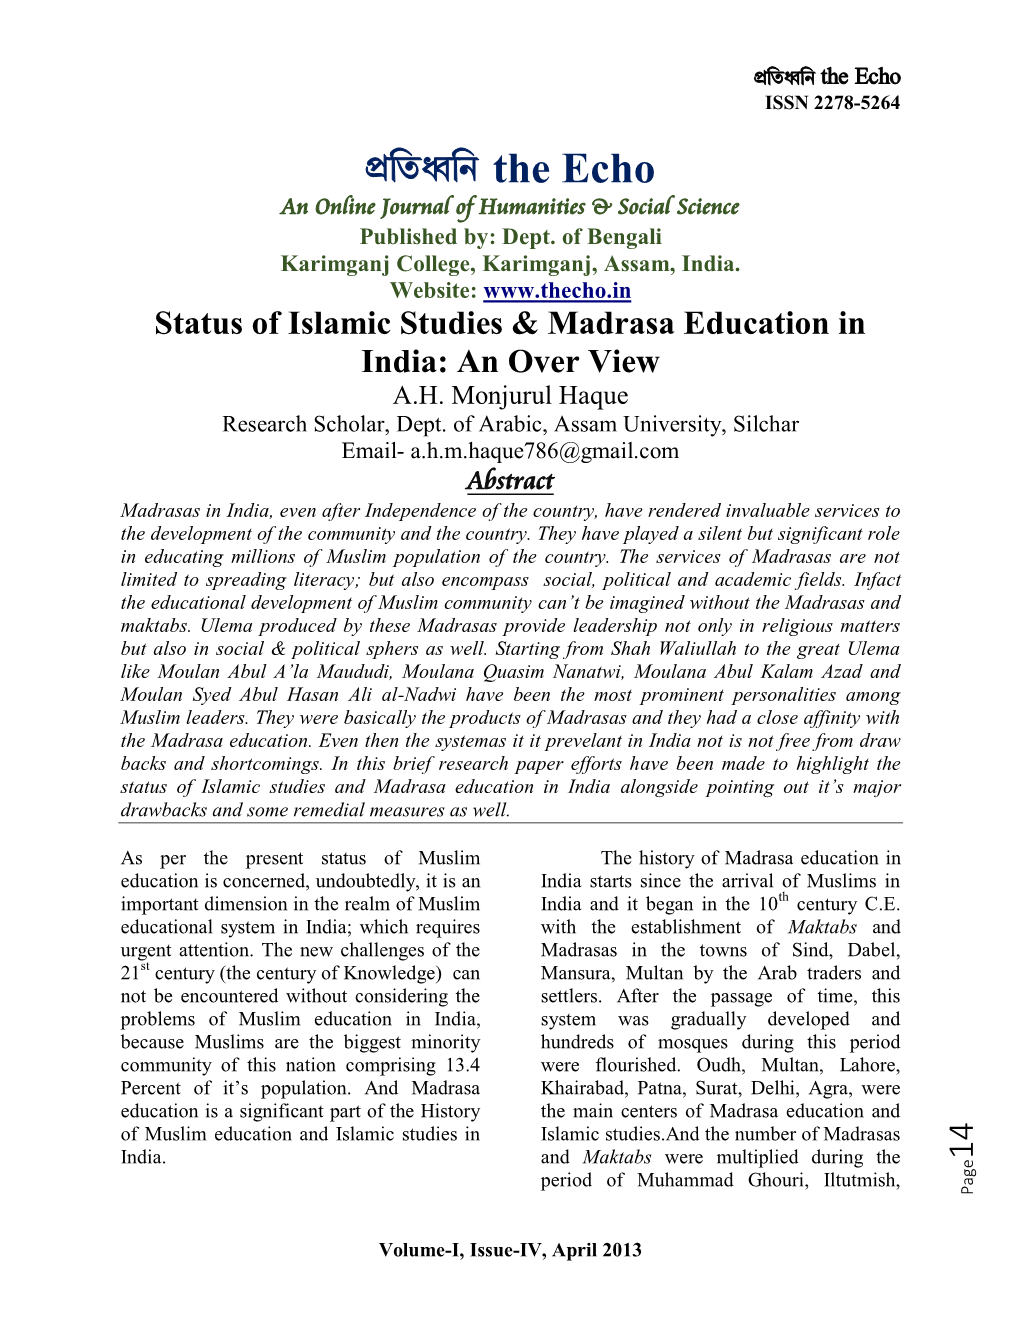 Status of Islamic Studies & Madrasa Education In